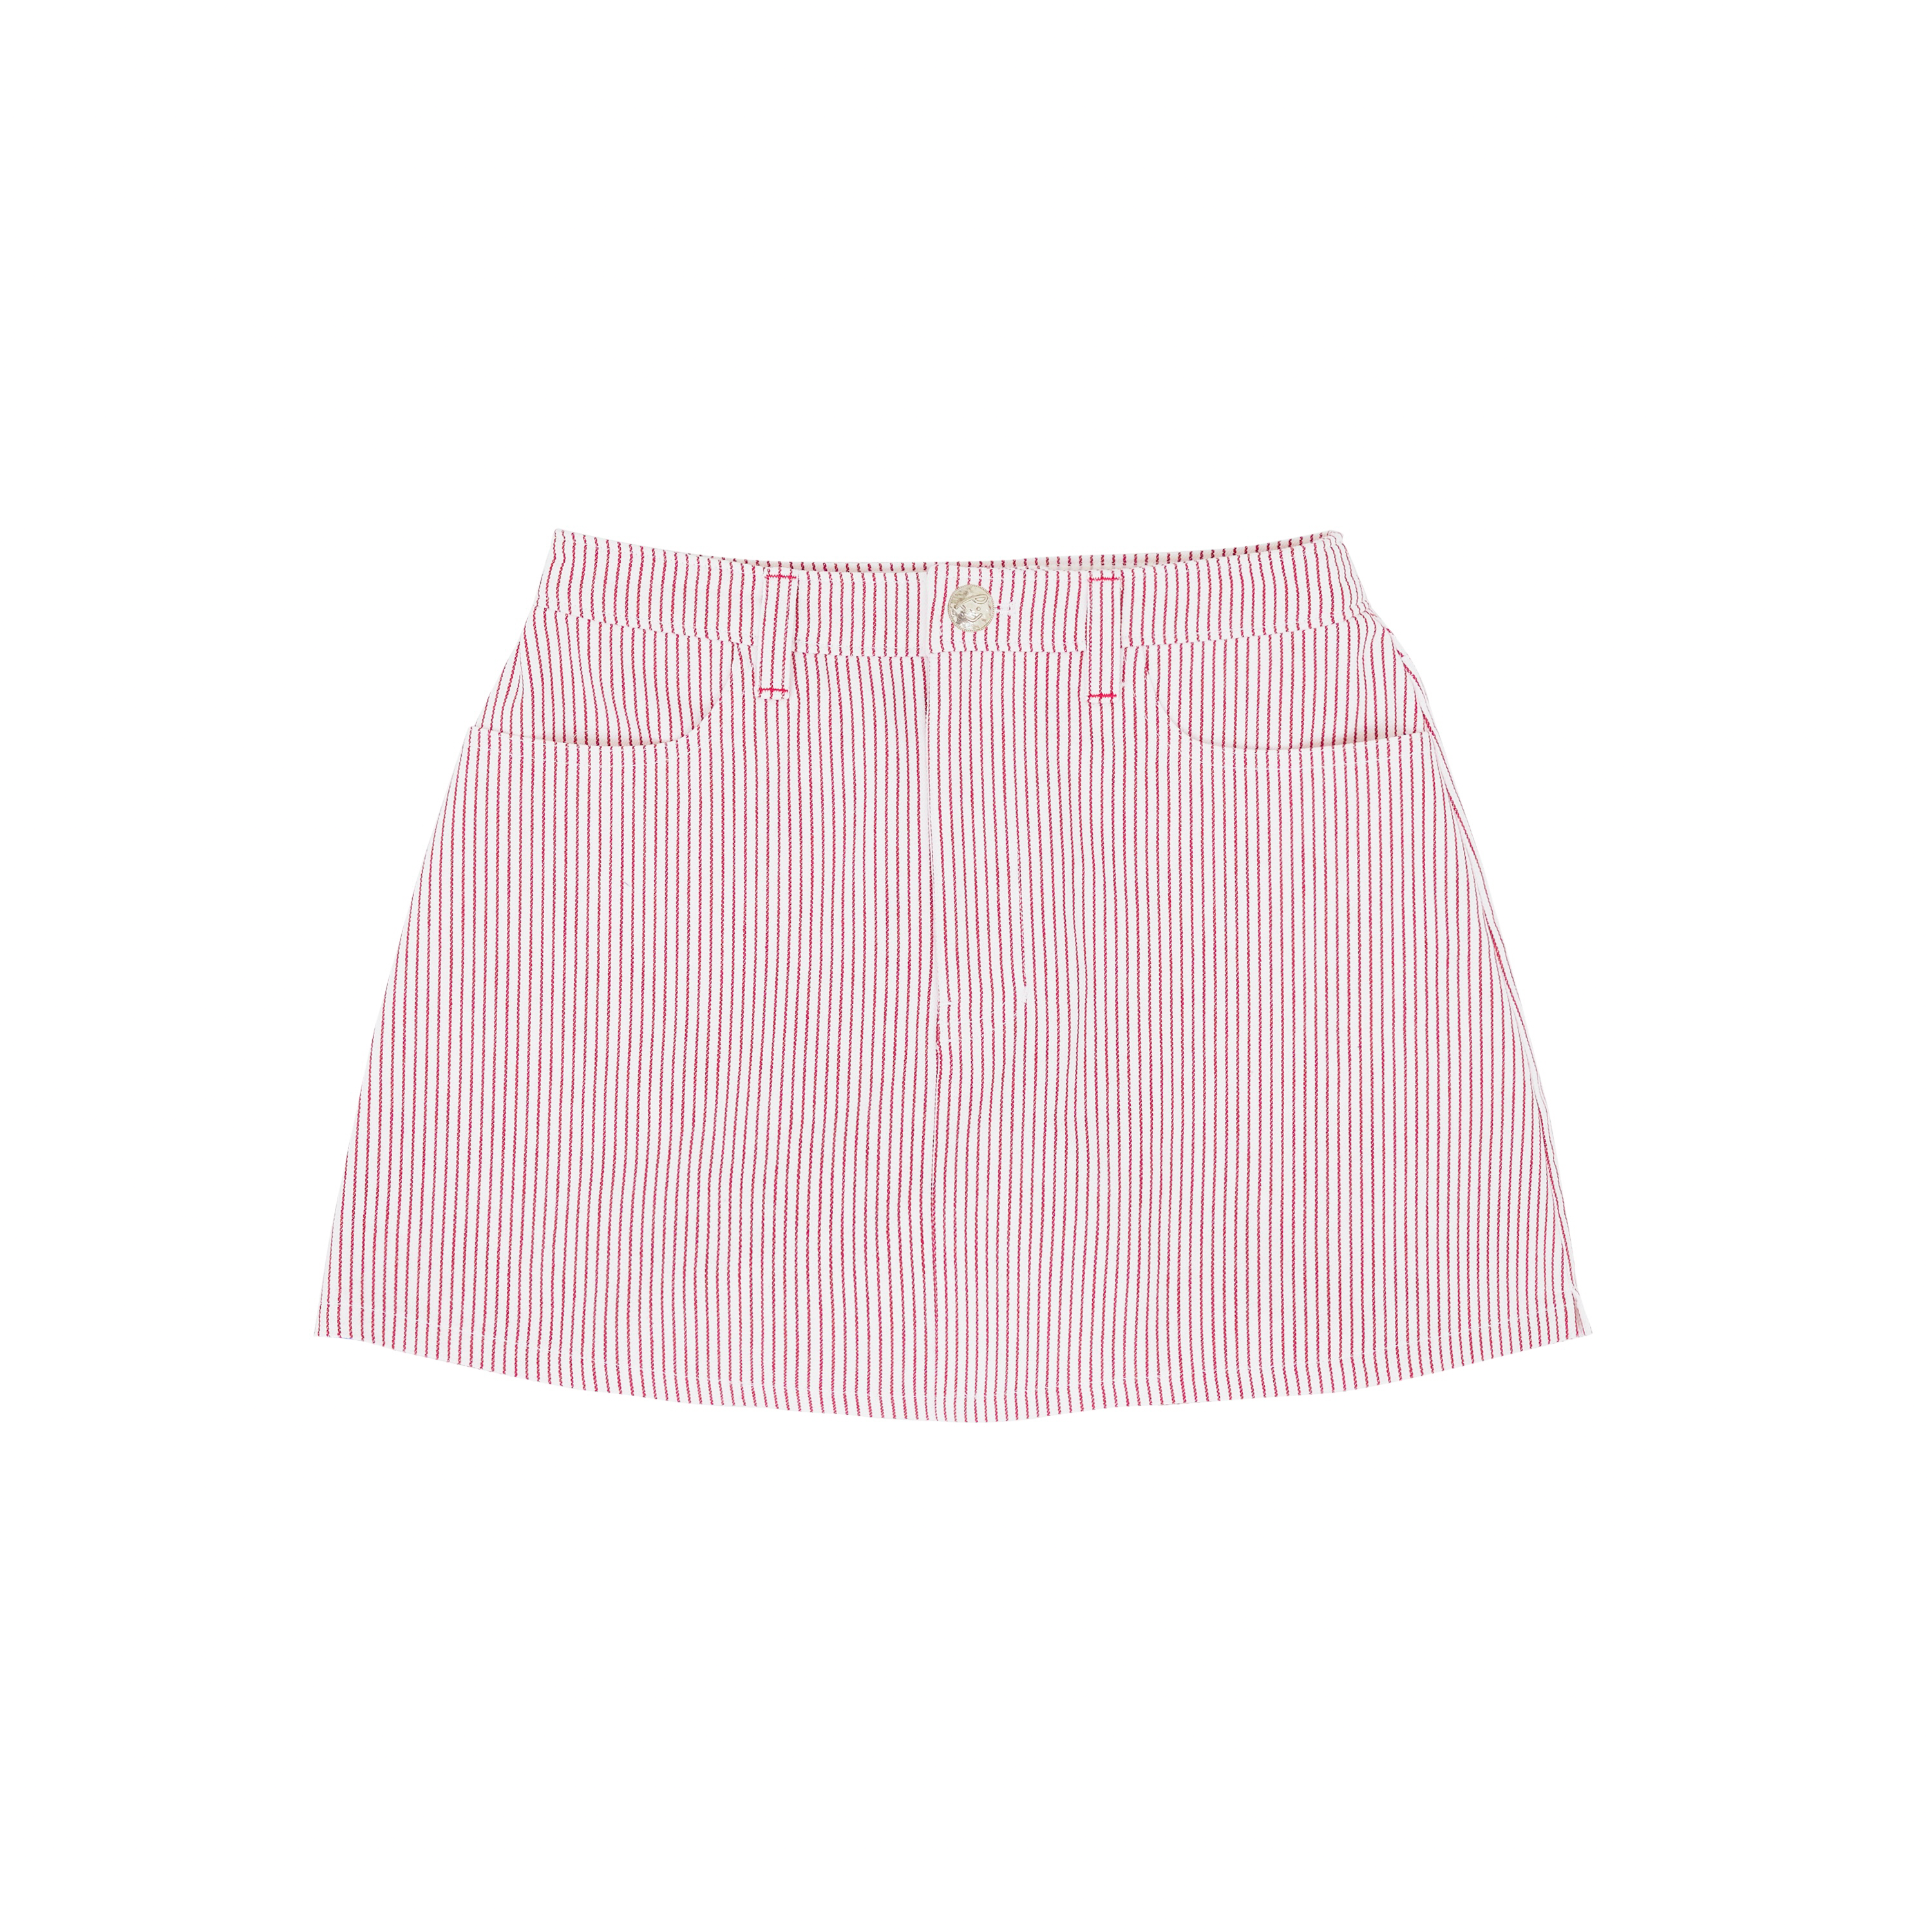 Stripe cotton skirtpants